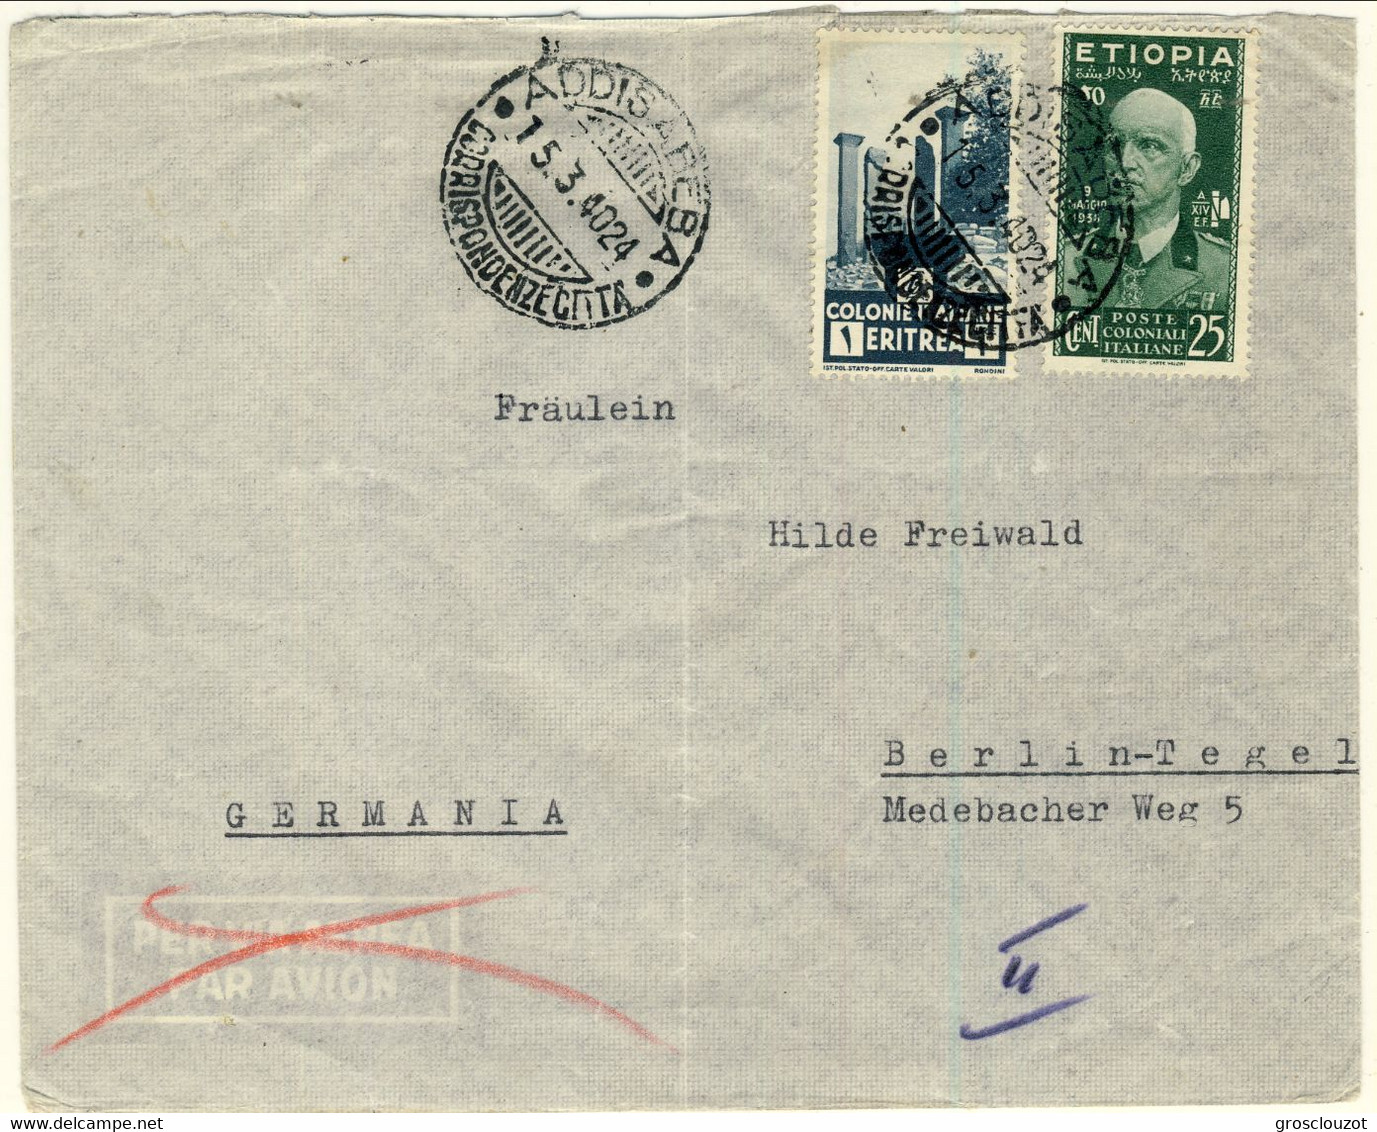 Etiopia 1940 Lettera Privata Addis Abeba-Germania Affrancata Con Il C. 25 Verde N. 3 E Eritrea L. 1 N. 209 - Ethiopie